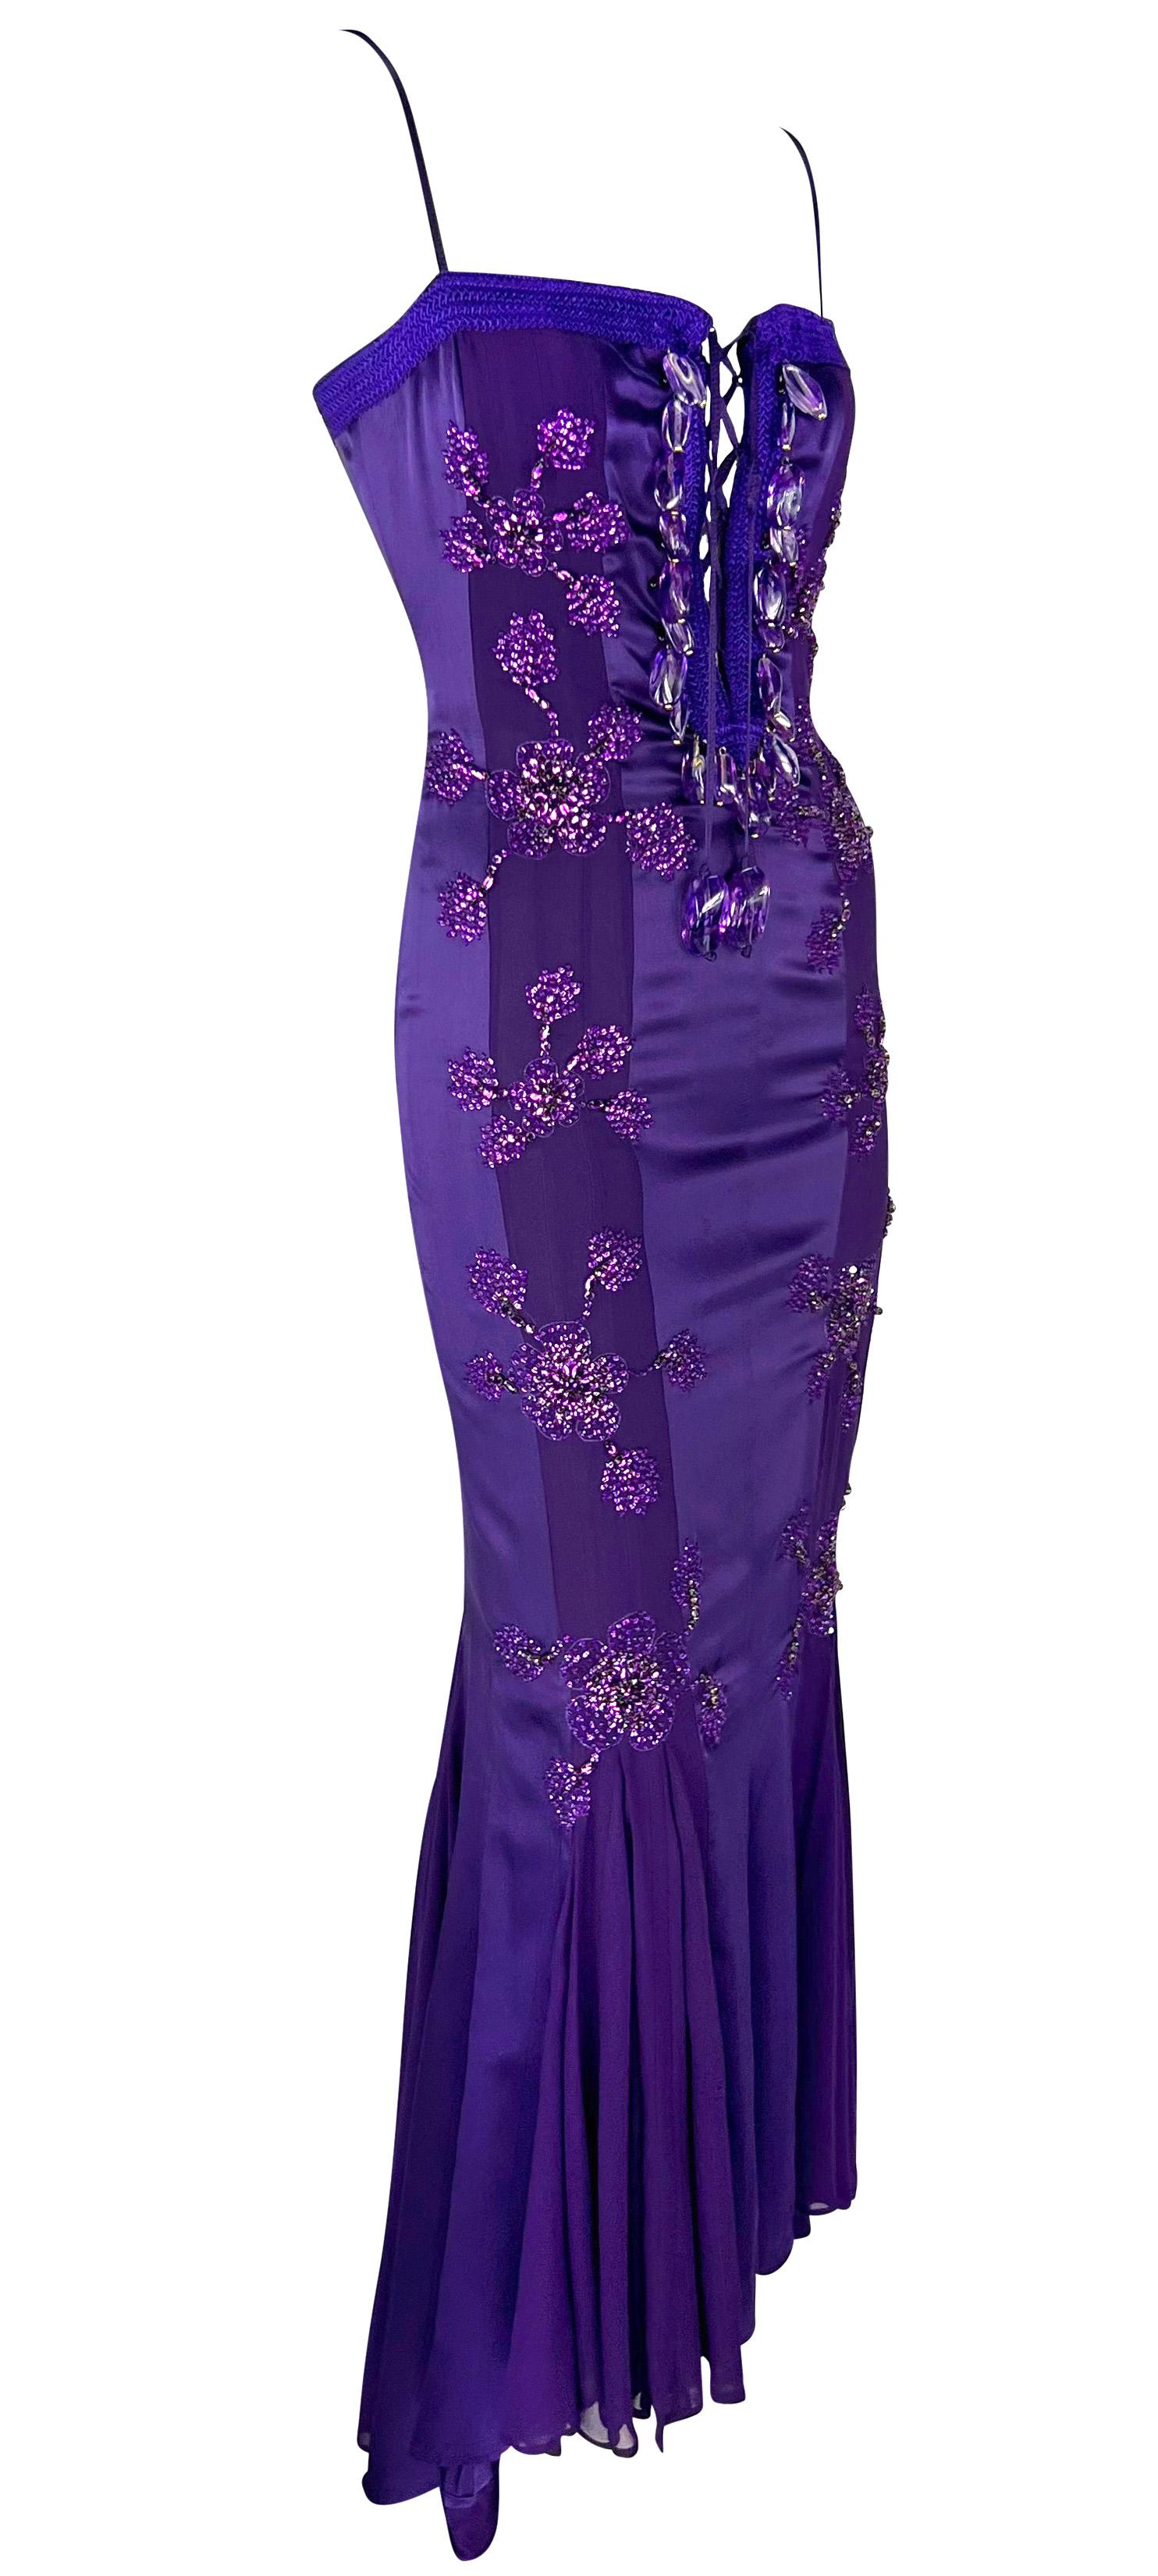 S/S 2005 Emanuel Ungaro by Giambattista Valli Rhinestone Purple Lace-Up Gown For Sale 10